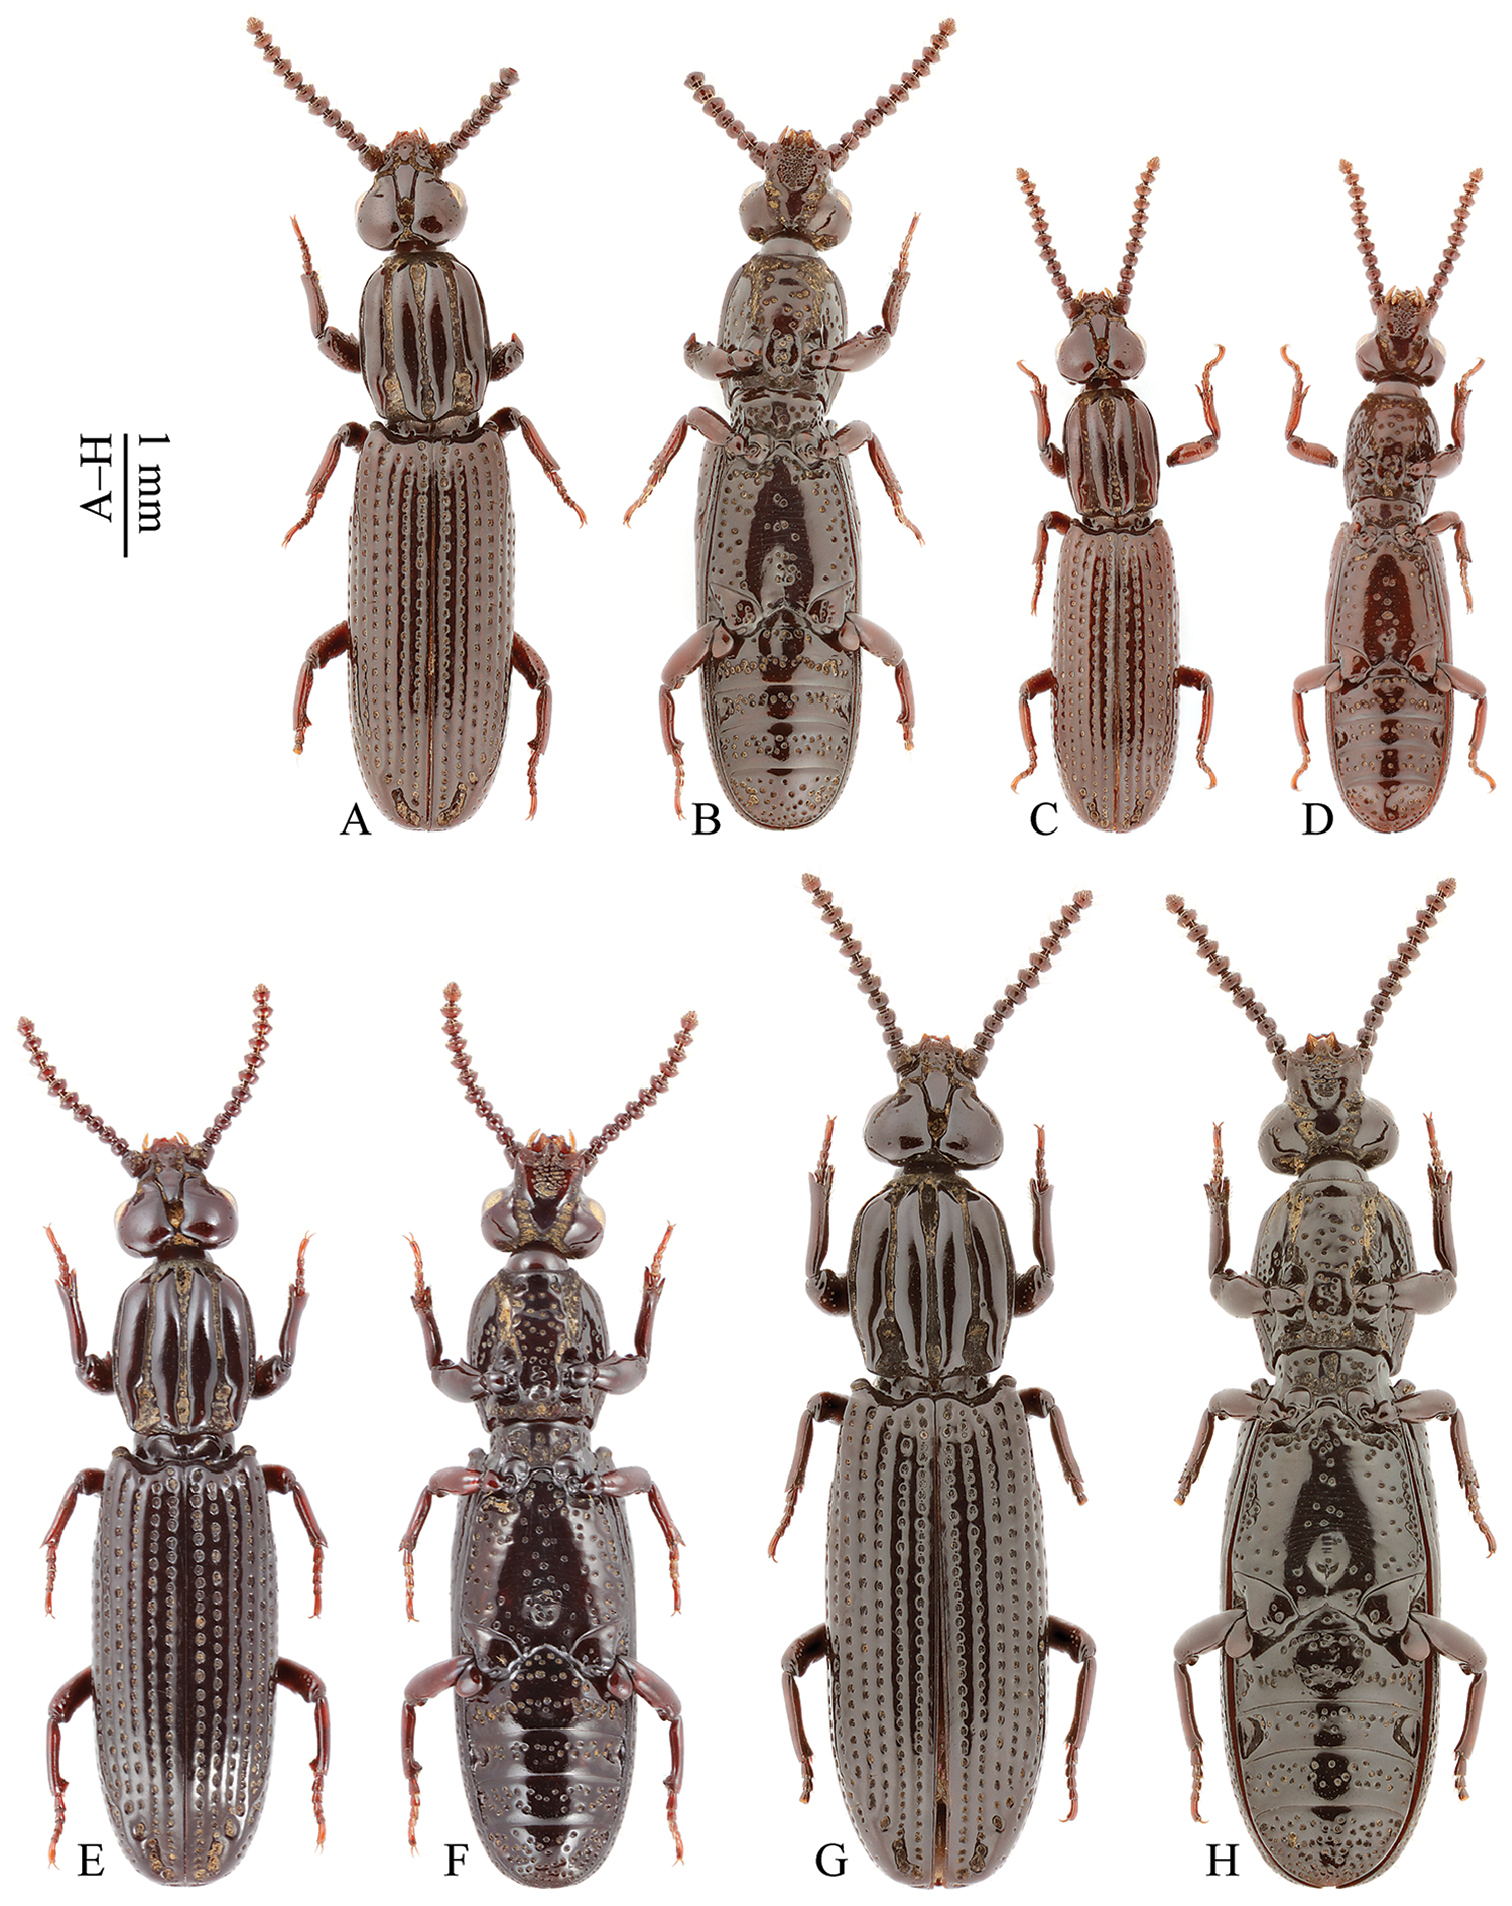 Omoglymmius S Str Wukong Sp N A New Species From Xizang China Coleoptera Rhysodidae Omoglymmiini